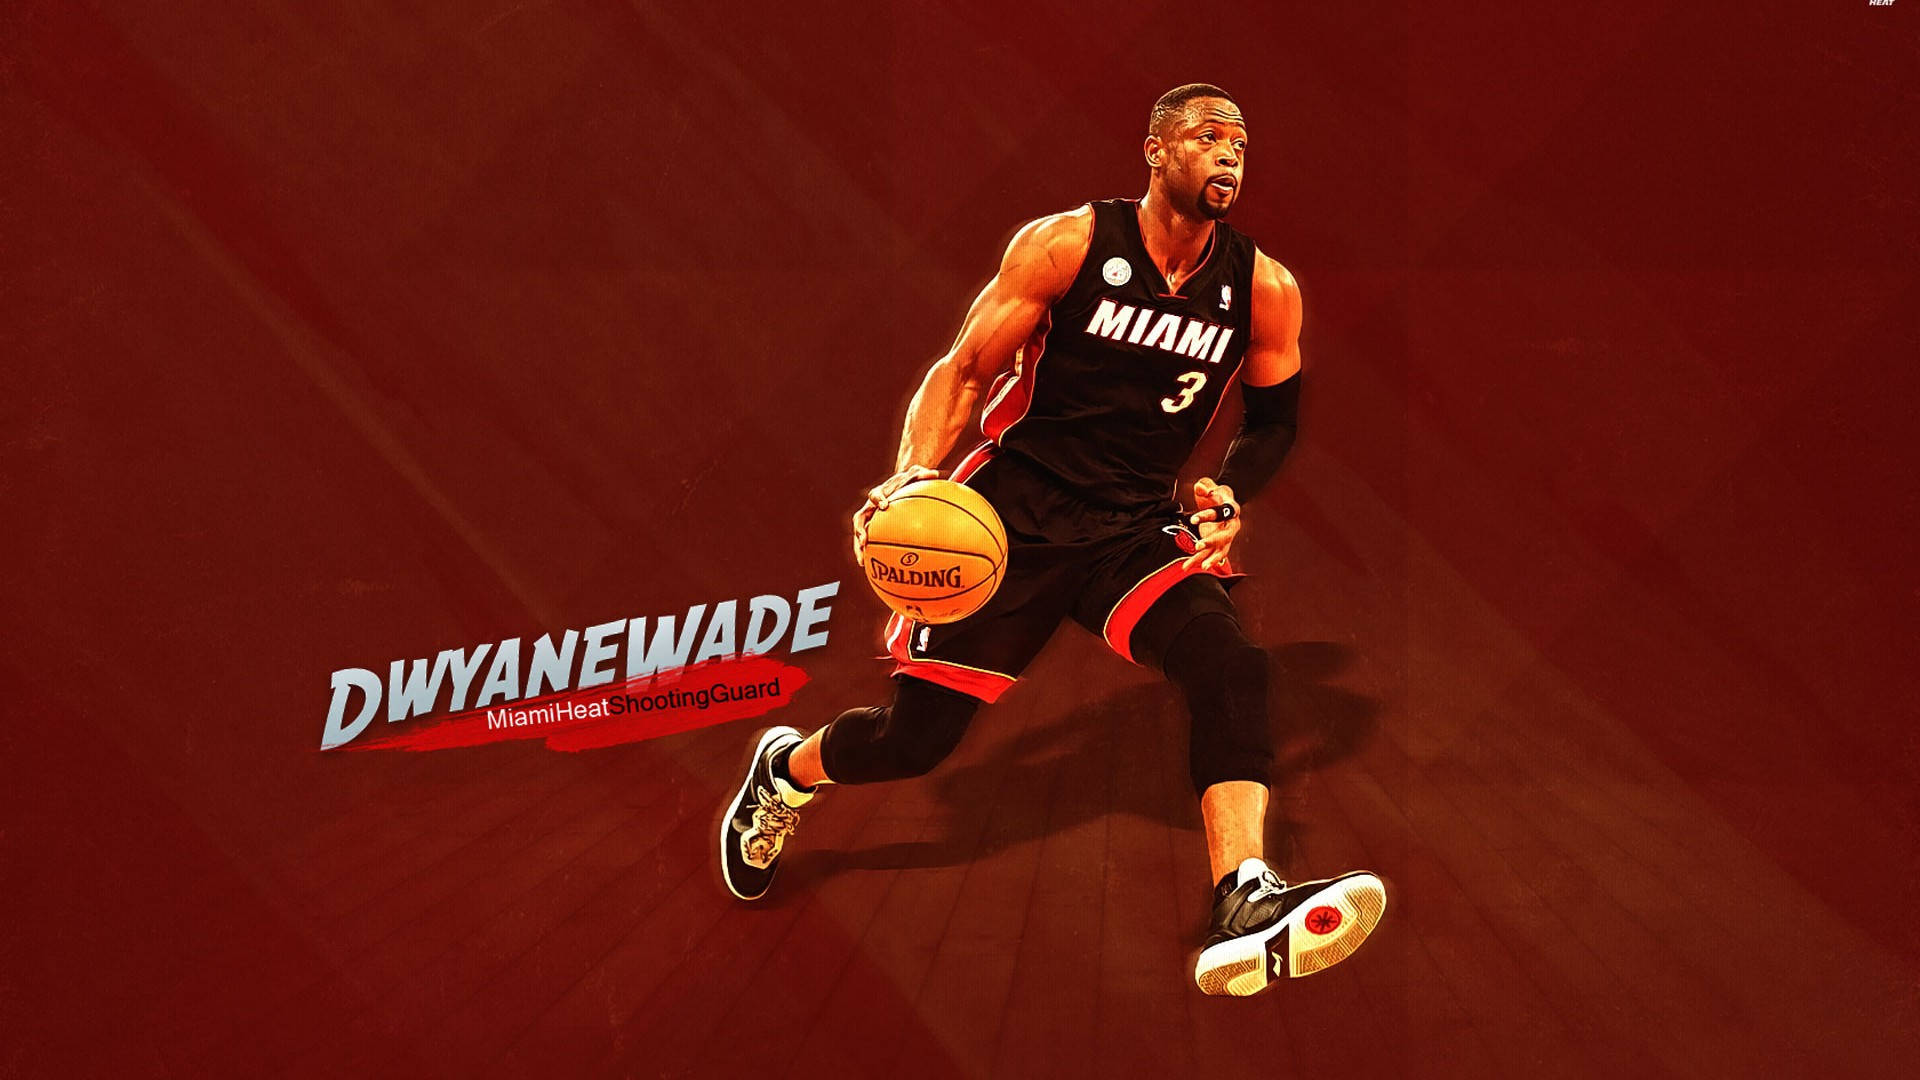 Miami Heat Dwayne Wade wallpaper